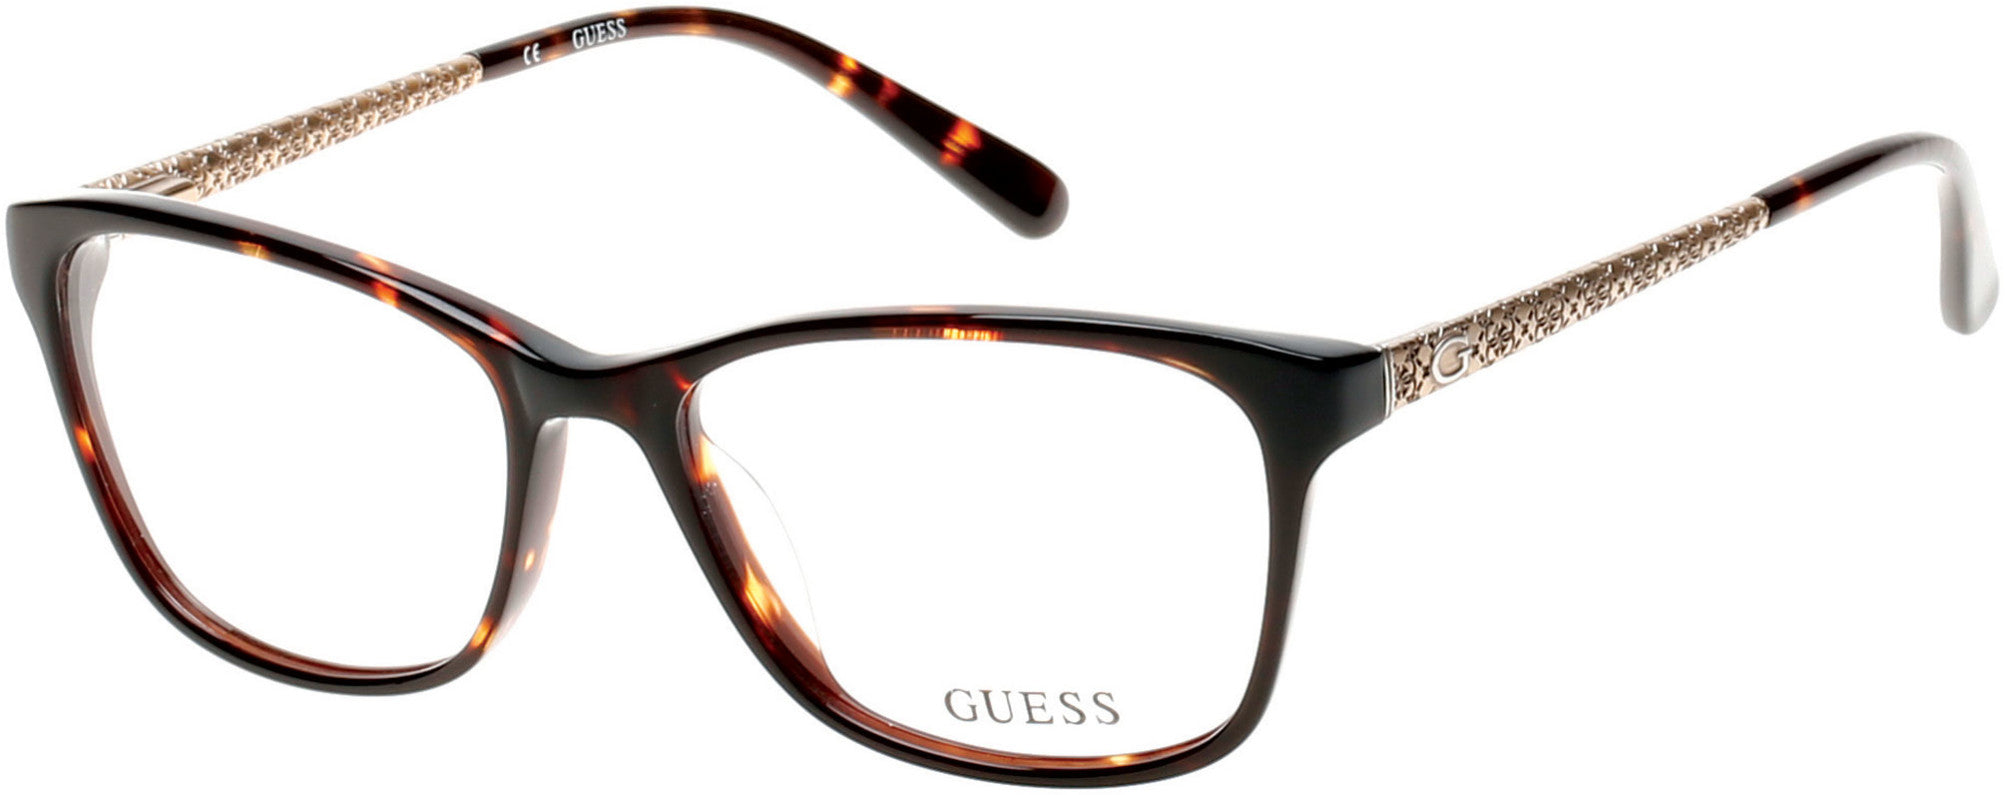 Guess GU2500 Square Eyeglasses 052-052 - Dark Havana